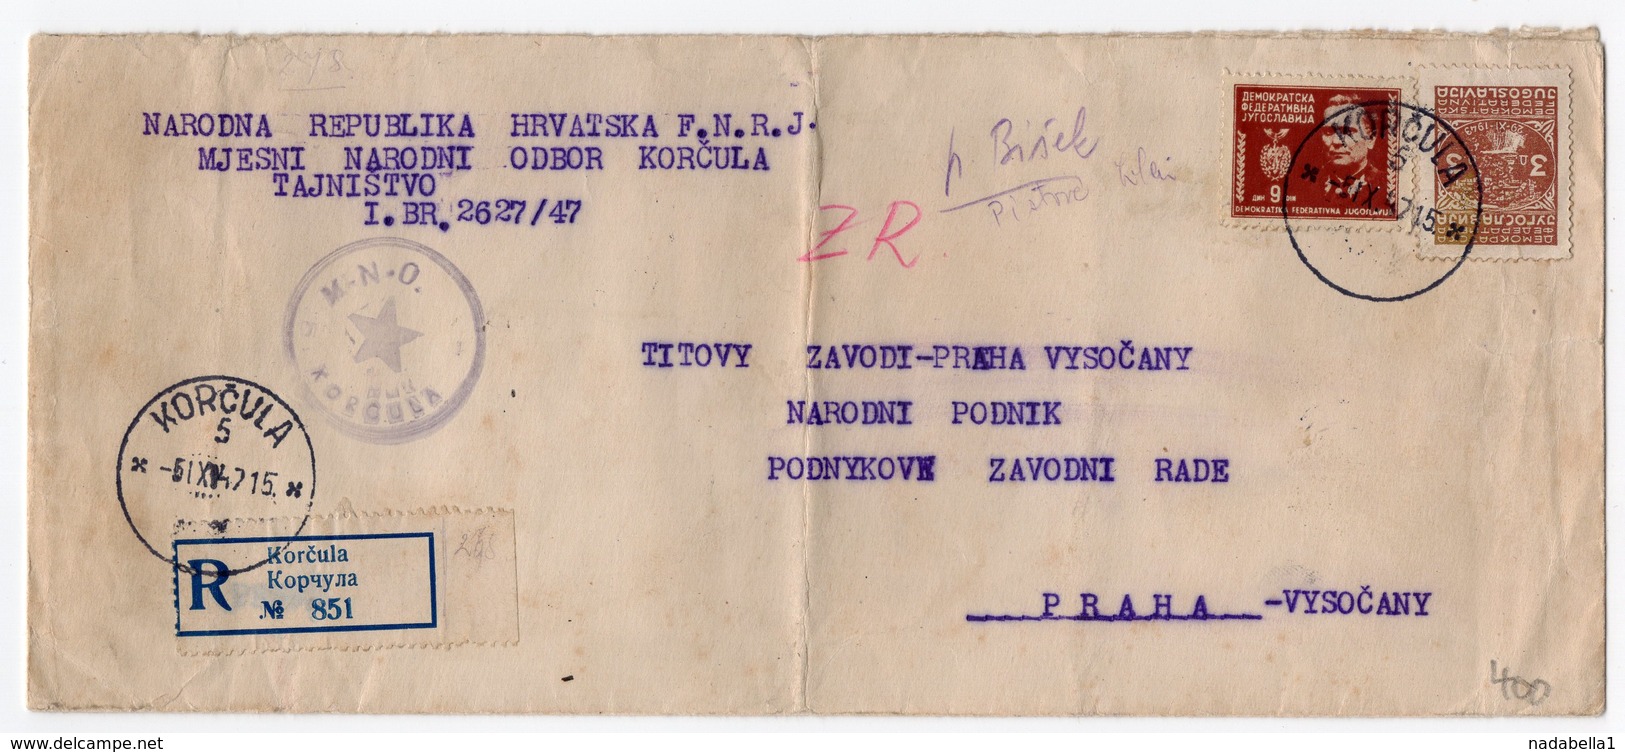 1947 YUGOSLAVIA, CROATIA, KORCULA TO PRAHA, CZECHOSLOVAKIA, REGISTERED MAIL - Covers & Documents